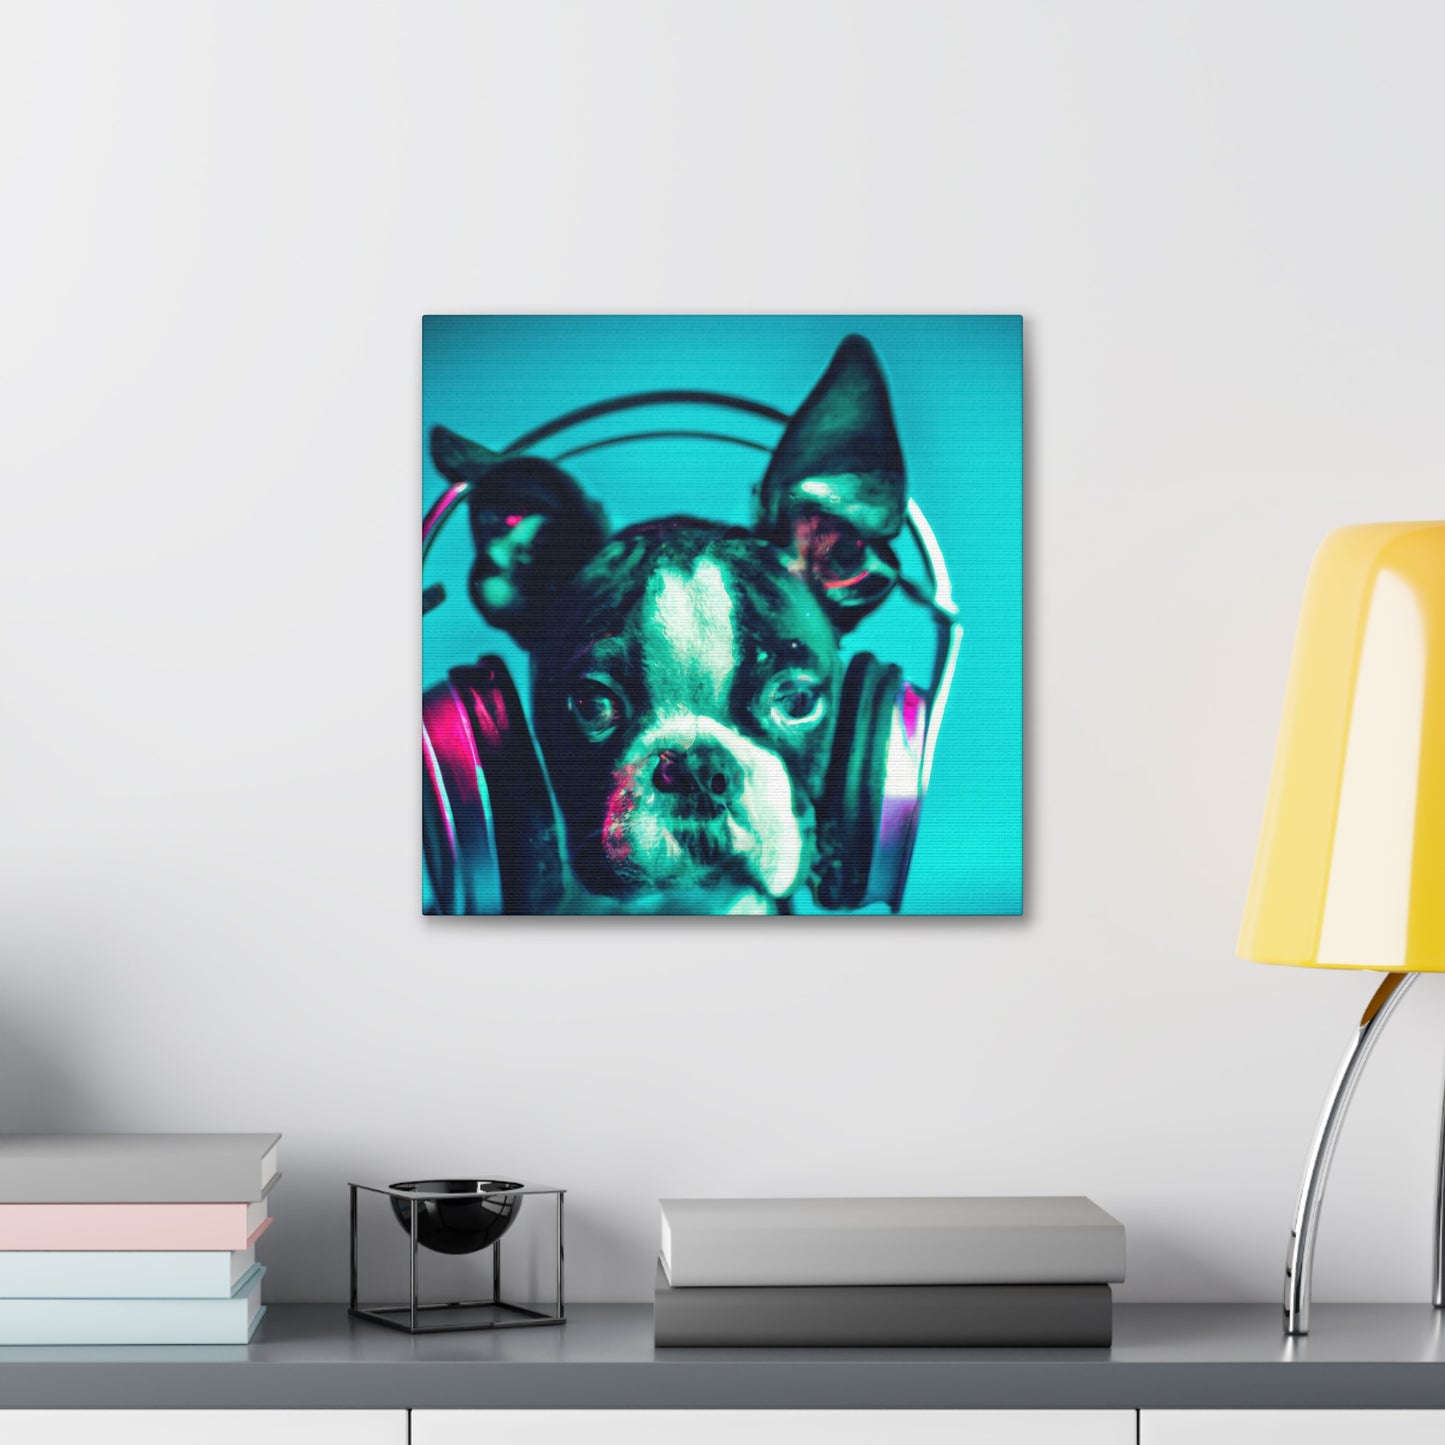 Ludovick Caspian Windsor - Boston Terrier - Canvas